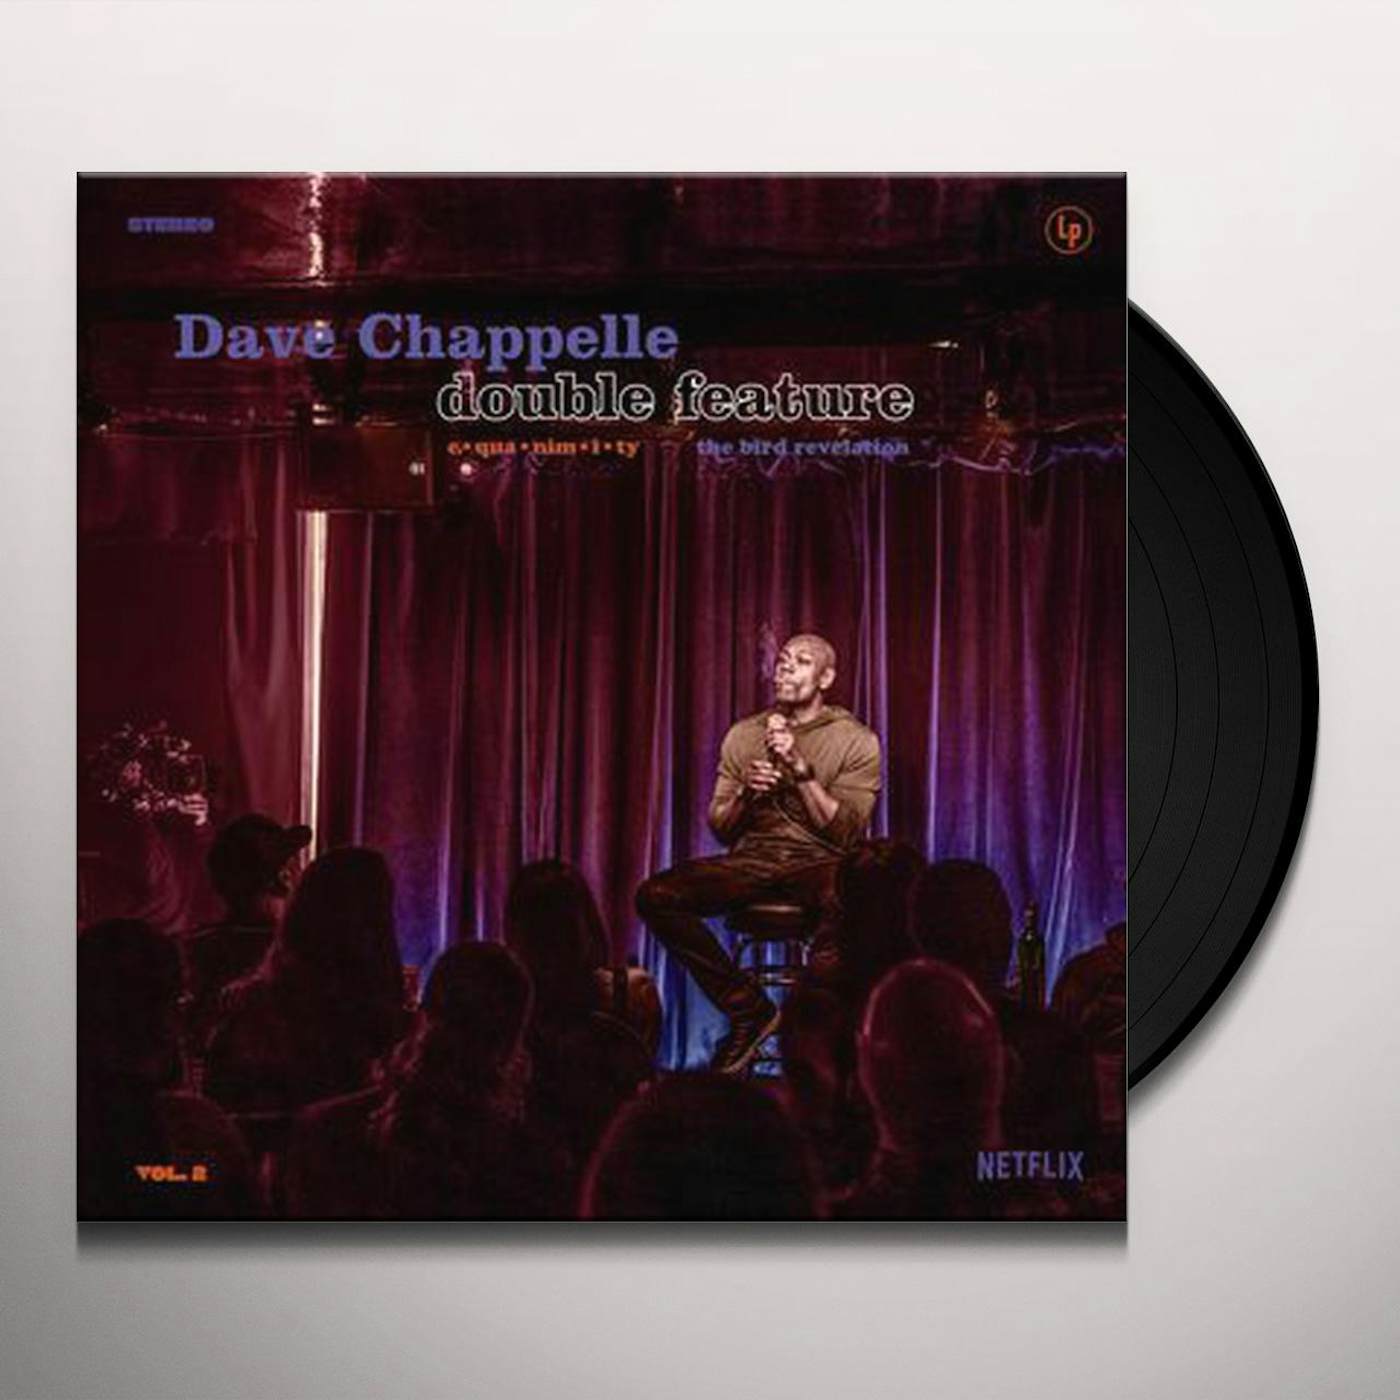 Dave Chappelle DOUBLE FEATURE - EQUANIMITY / BIRD REVELATION Vinyl Record